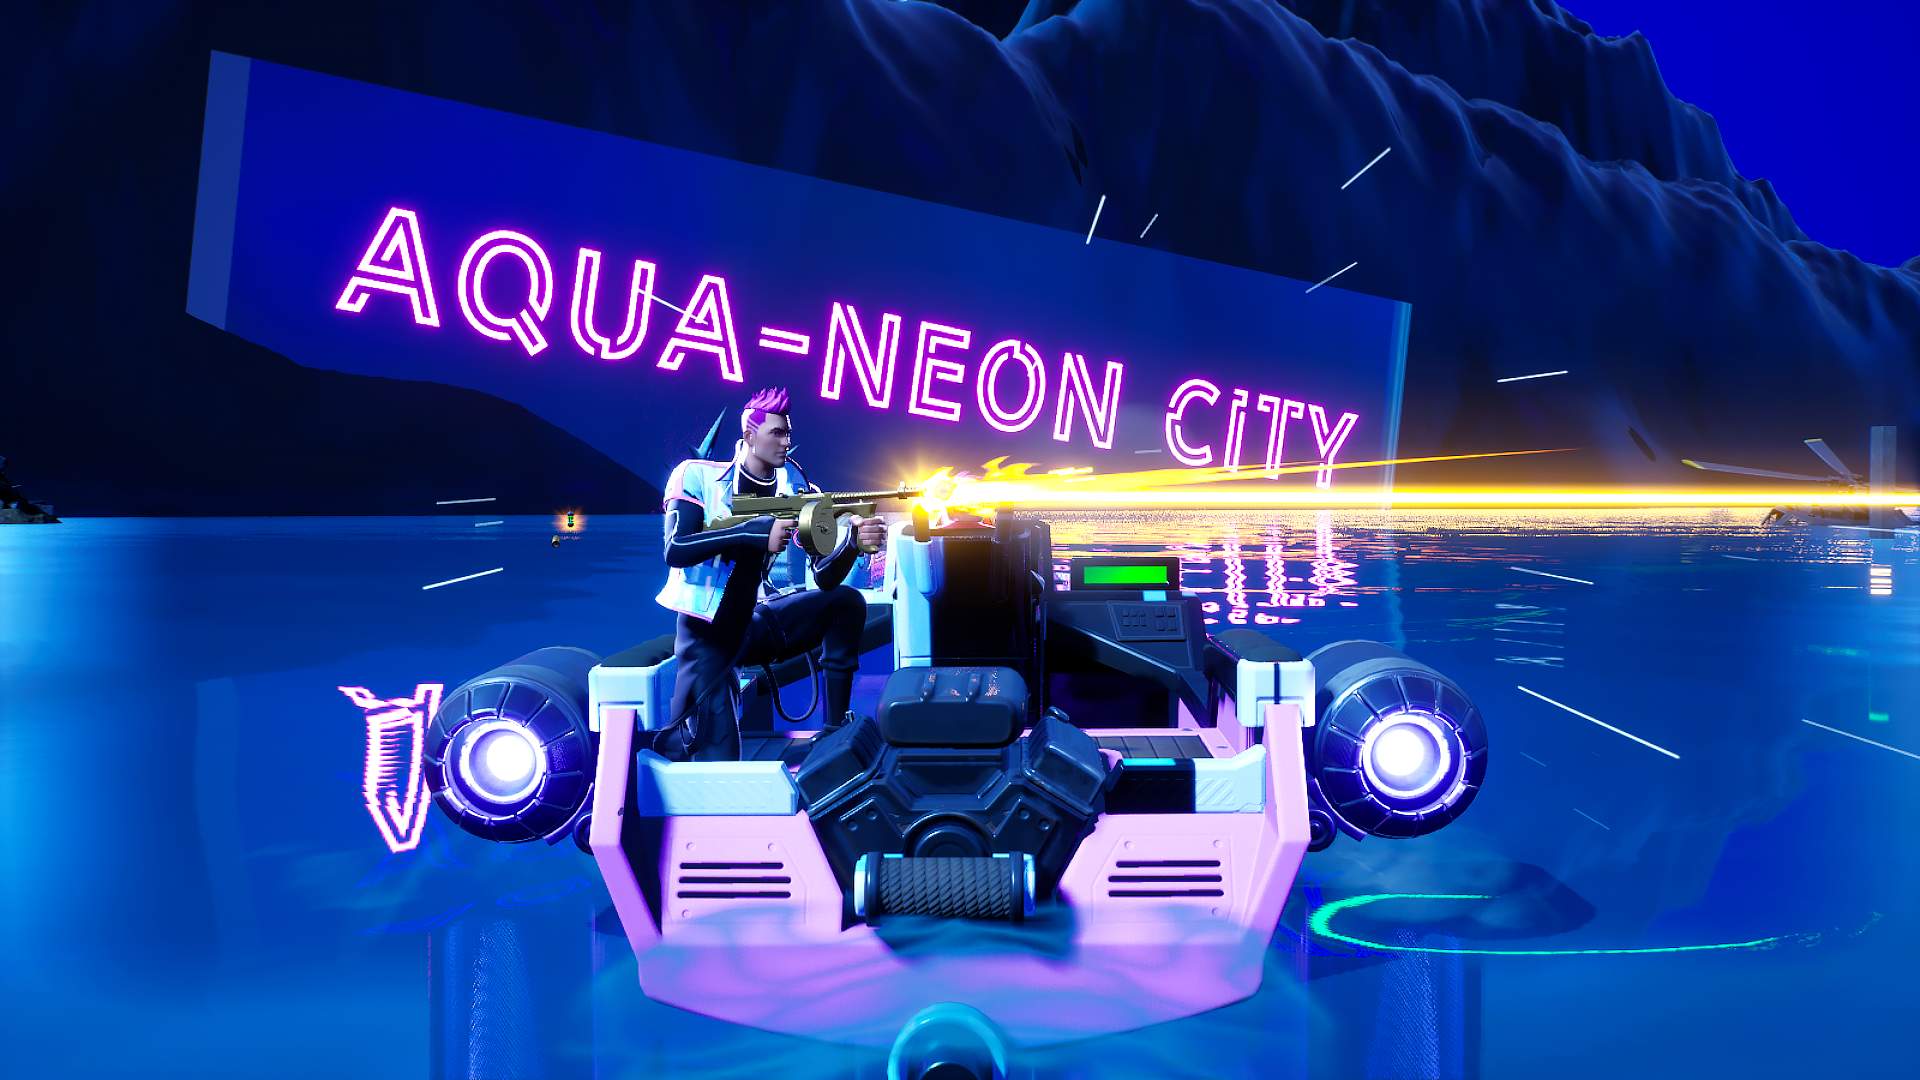 Aqua-Neon City: The Fight For Tomorrow